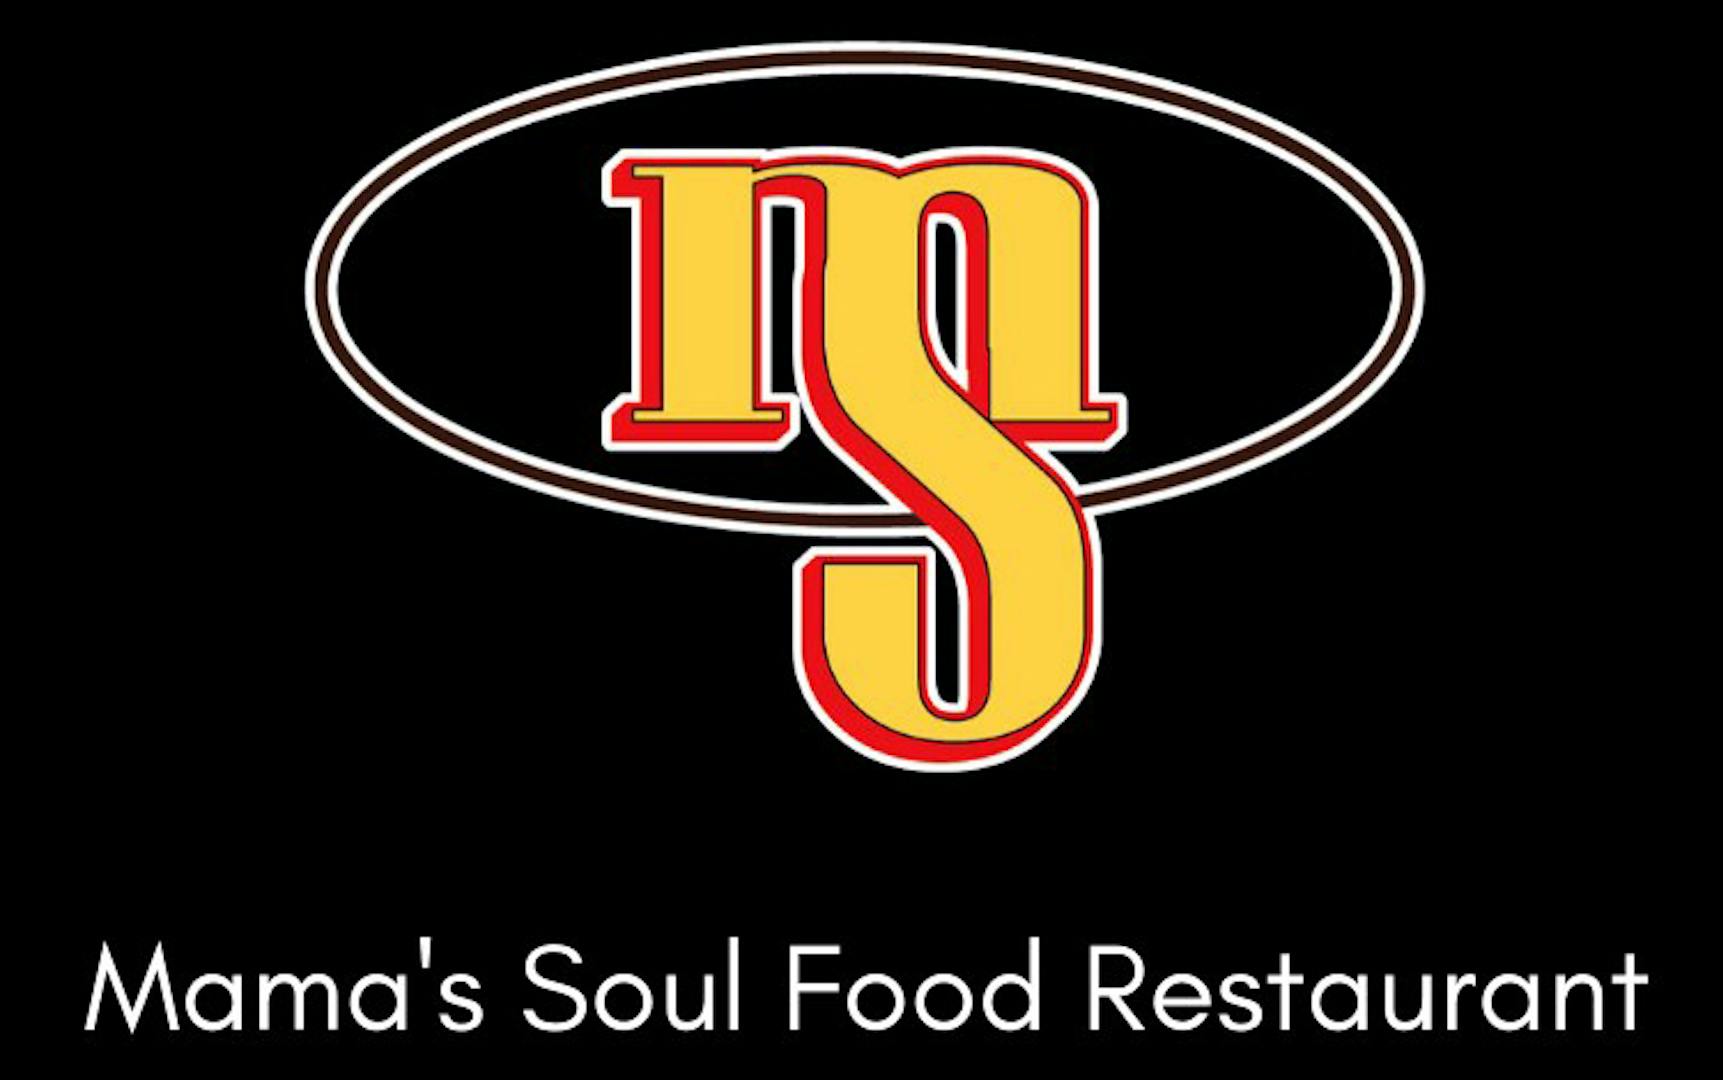 Southern Soul Food Restaurant Tampa, FL